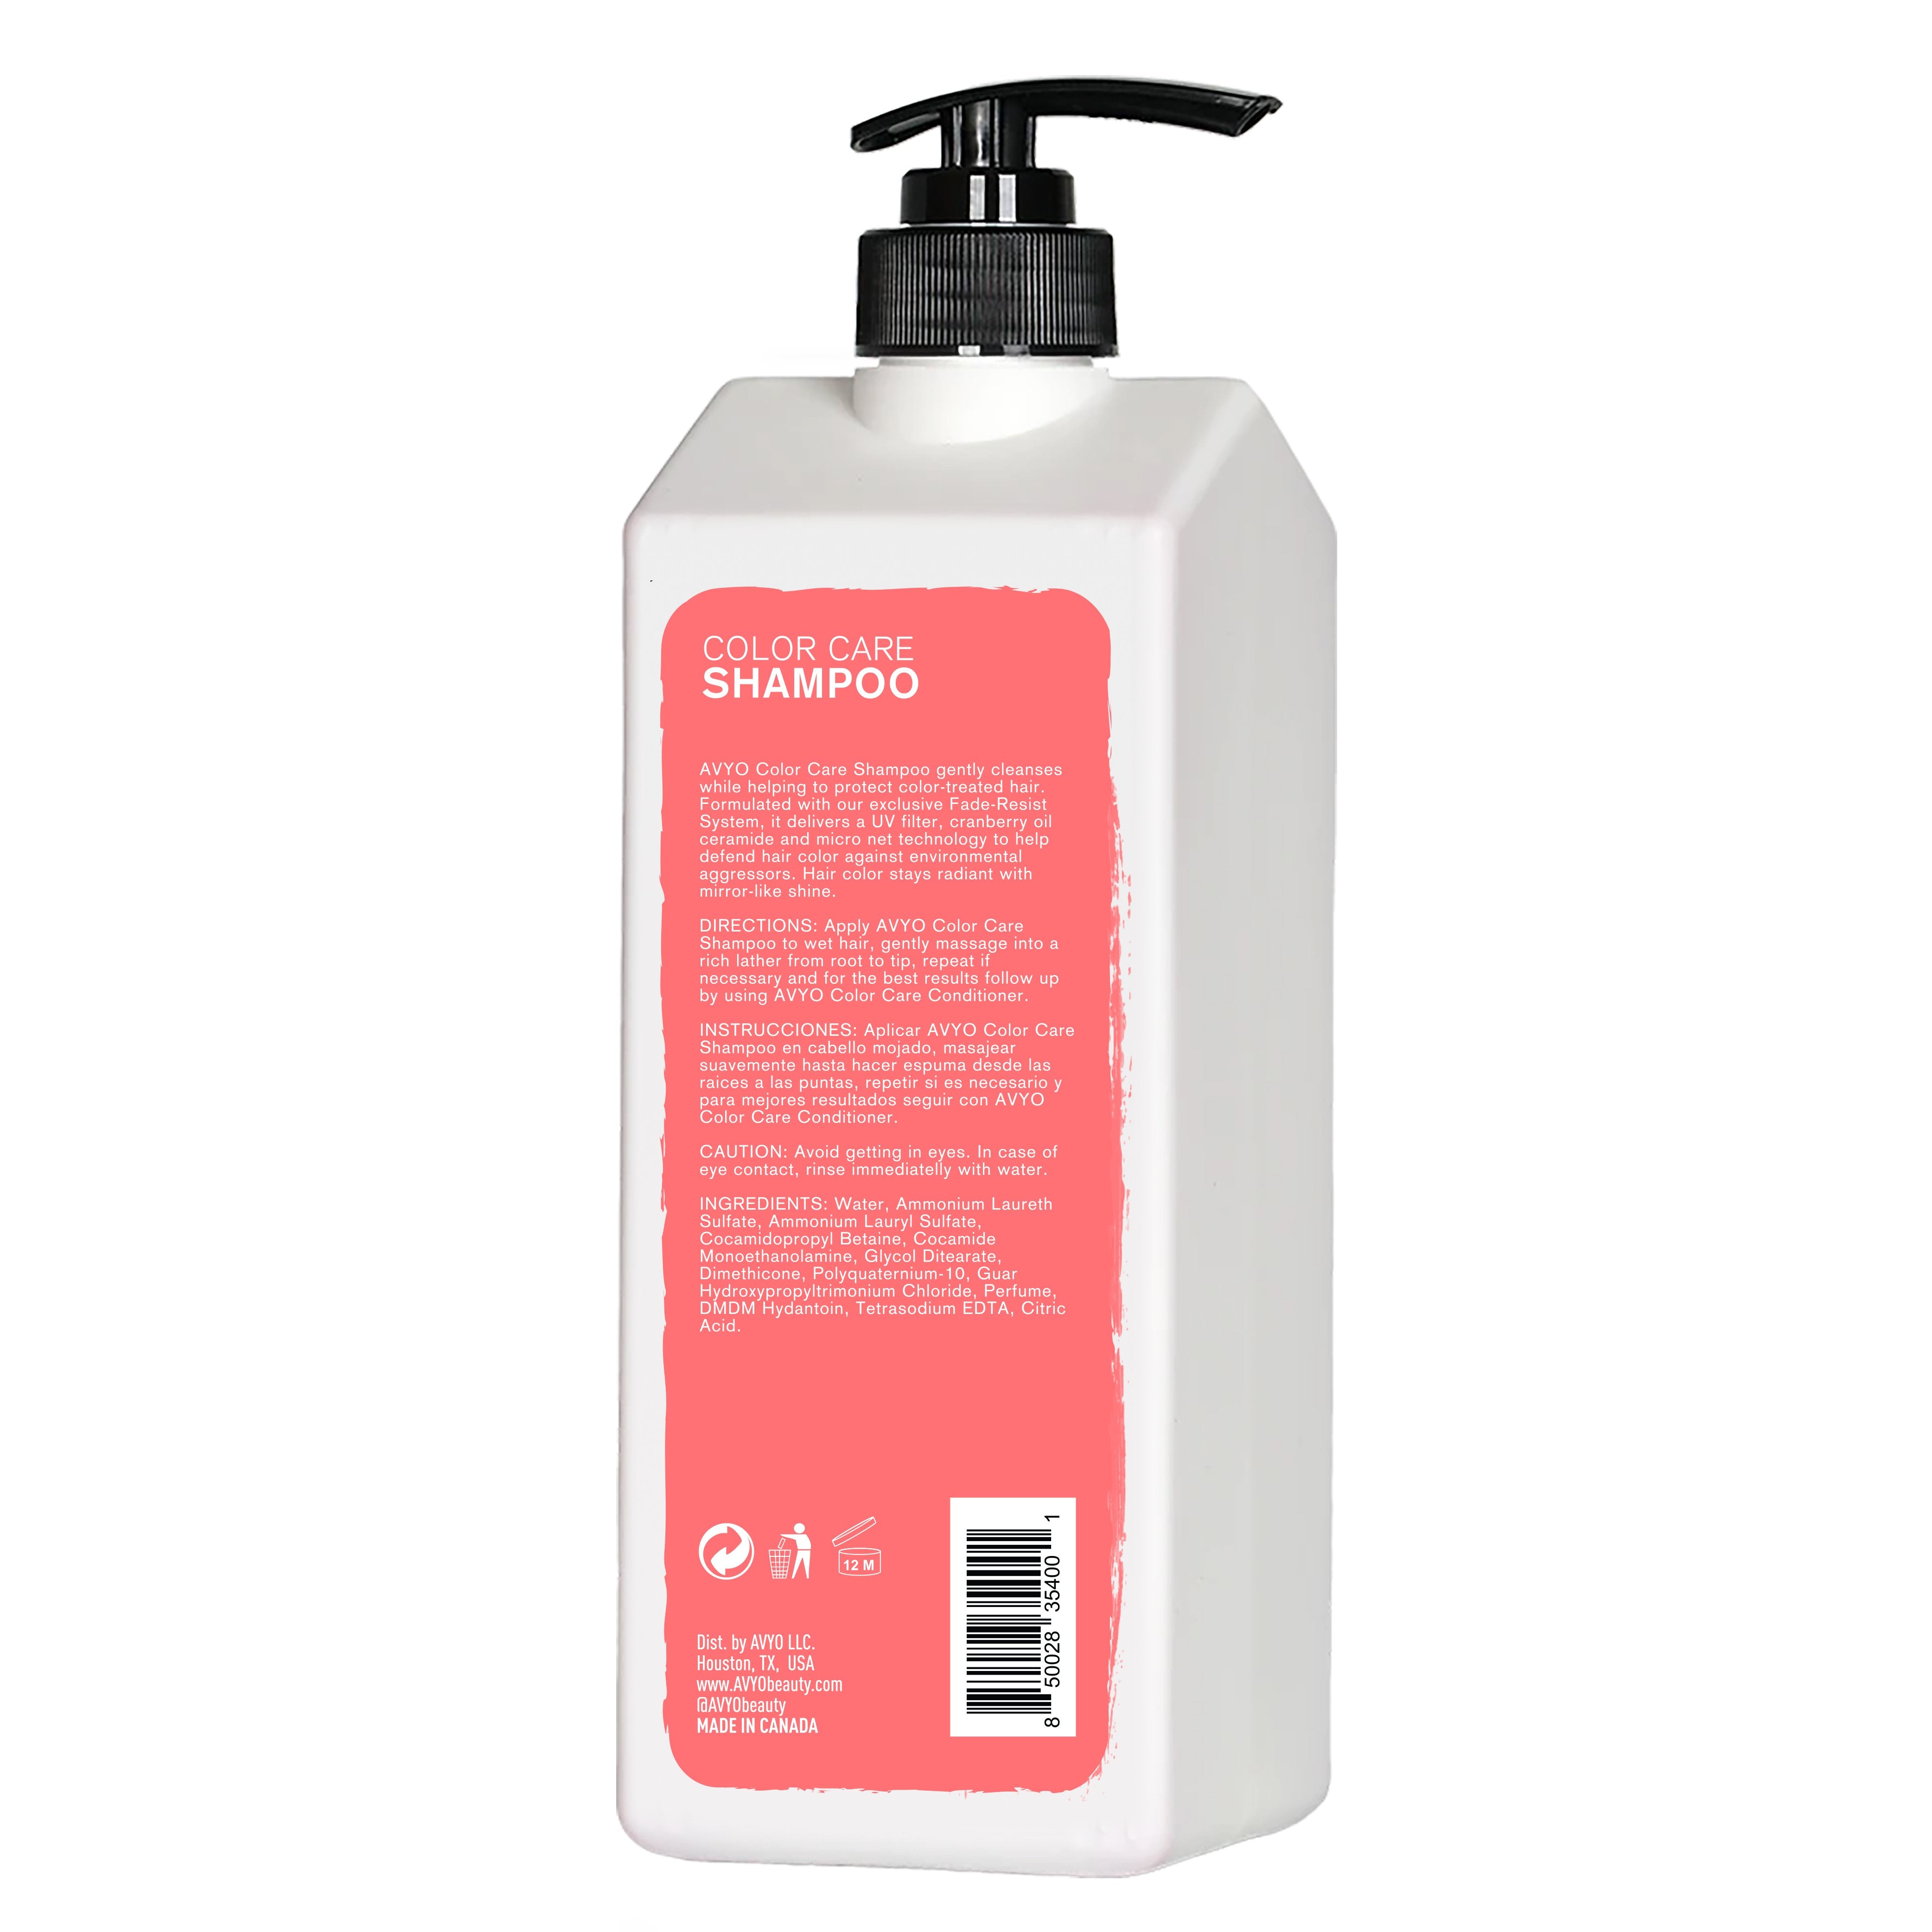 Color Care Shampoo |  16.9 fl. oz. | AVYO